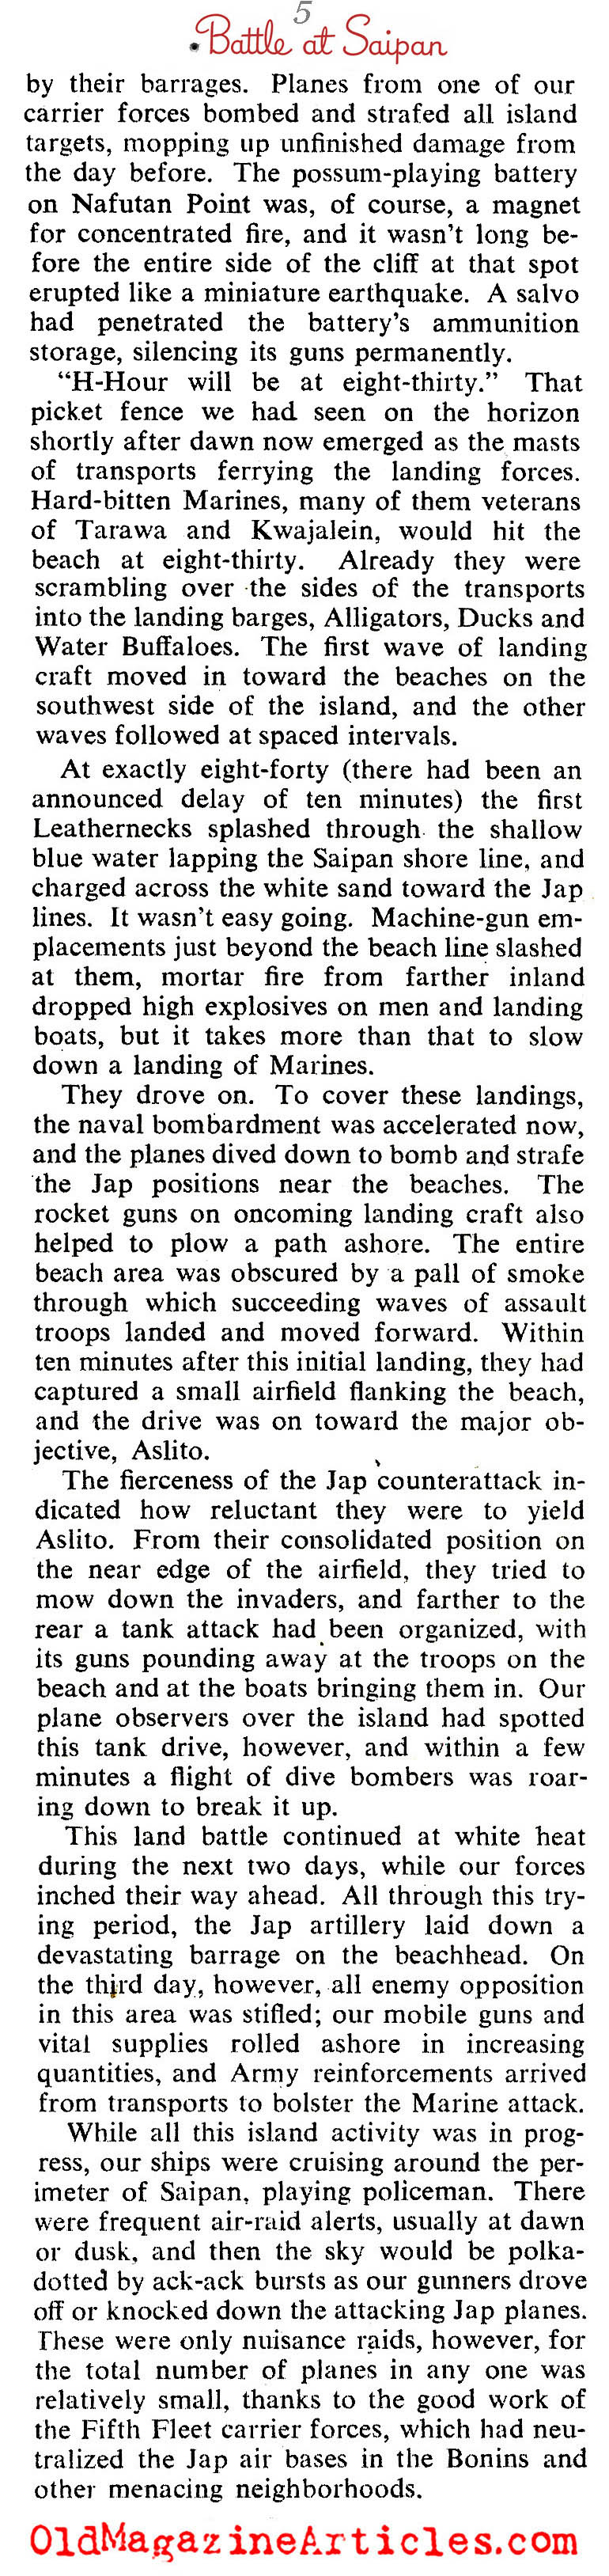 The American Invasion of Saipan (The American Magazine, 1944)